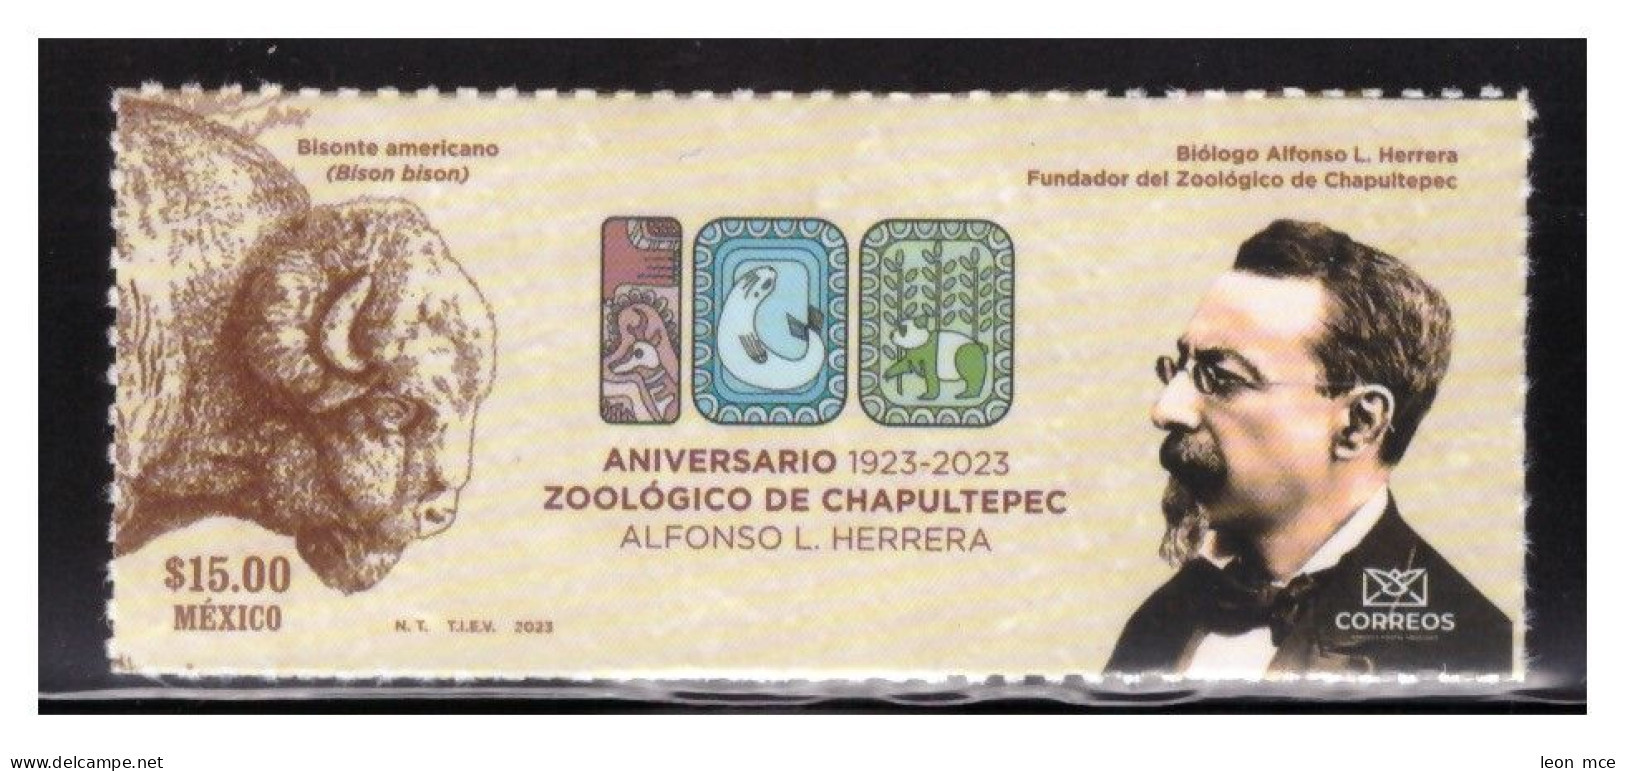 2023 MÉXICO 100 Años Zoológico Chapultepec, Alfonso L. Herrera, Self Adhesive Stamp, CENTENARY OF THE ZOO, BISON - México